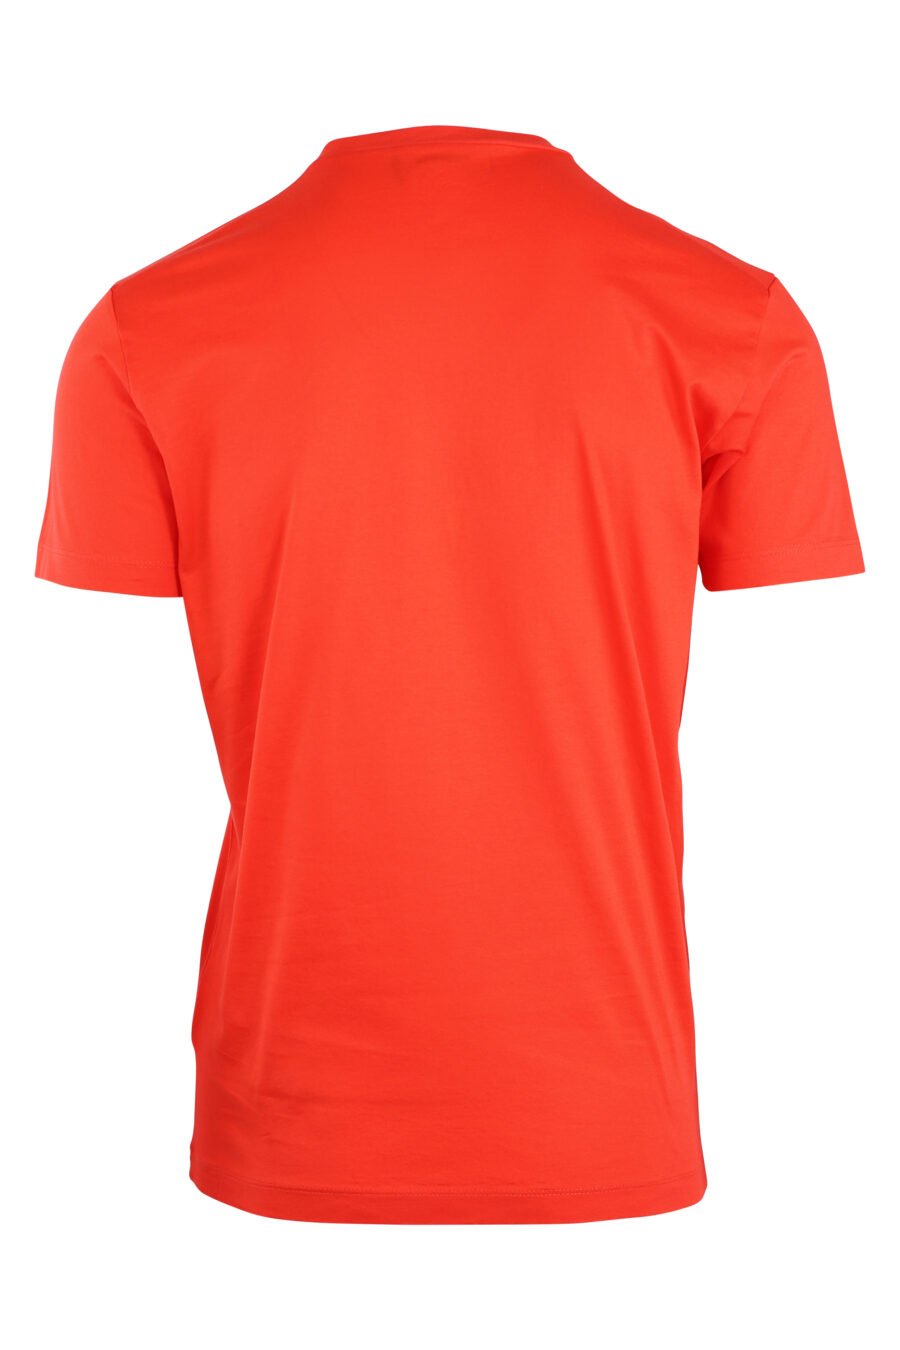 Orangefarbenes T-Shirt mit Minilogo "Icon" - IMG 8925